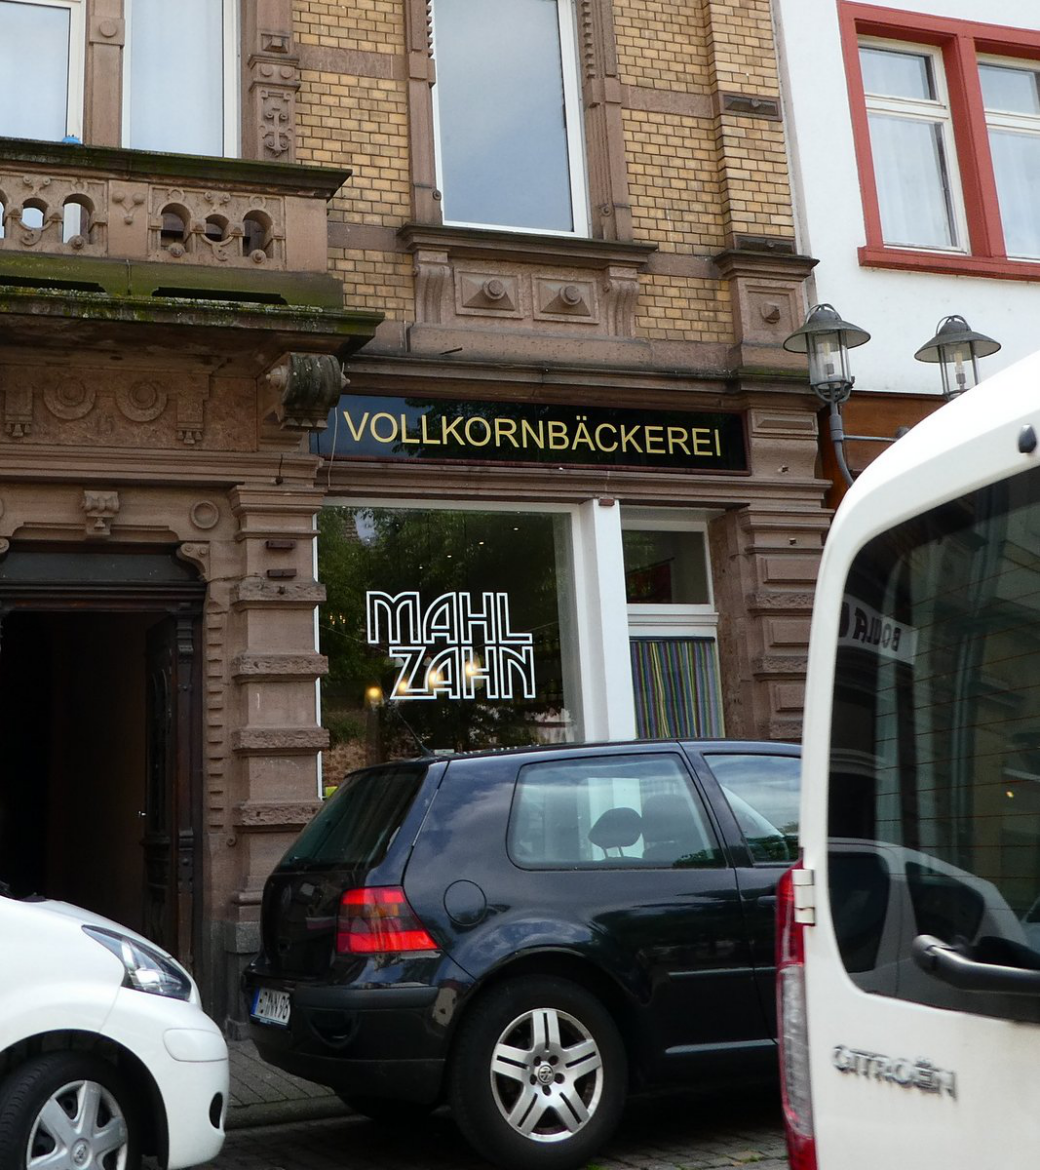  Der Mahlzahn Vollkornbäckerei GmbH